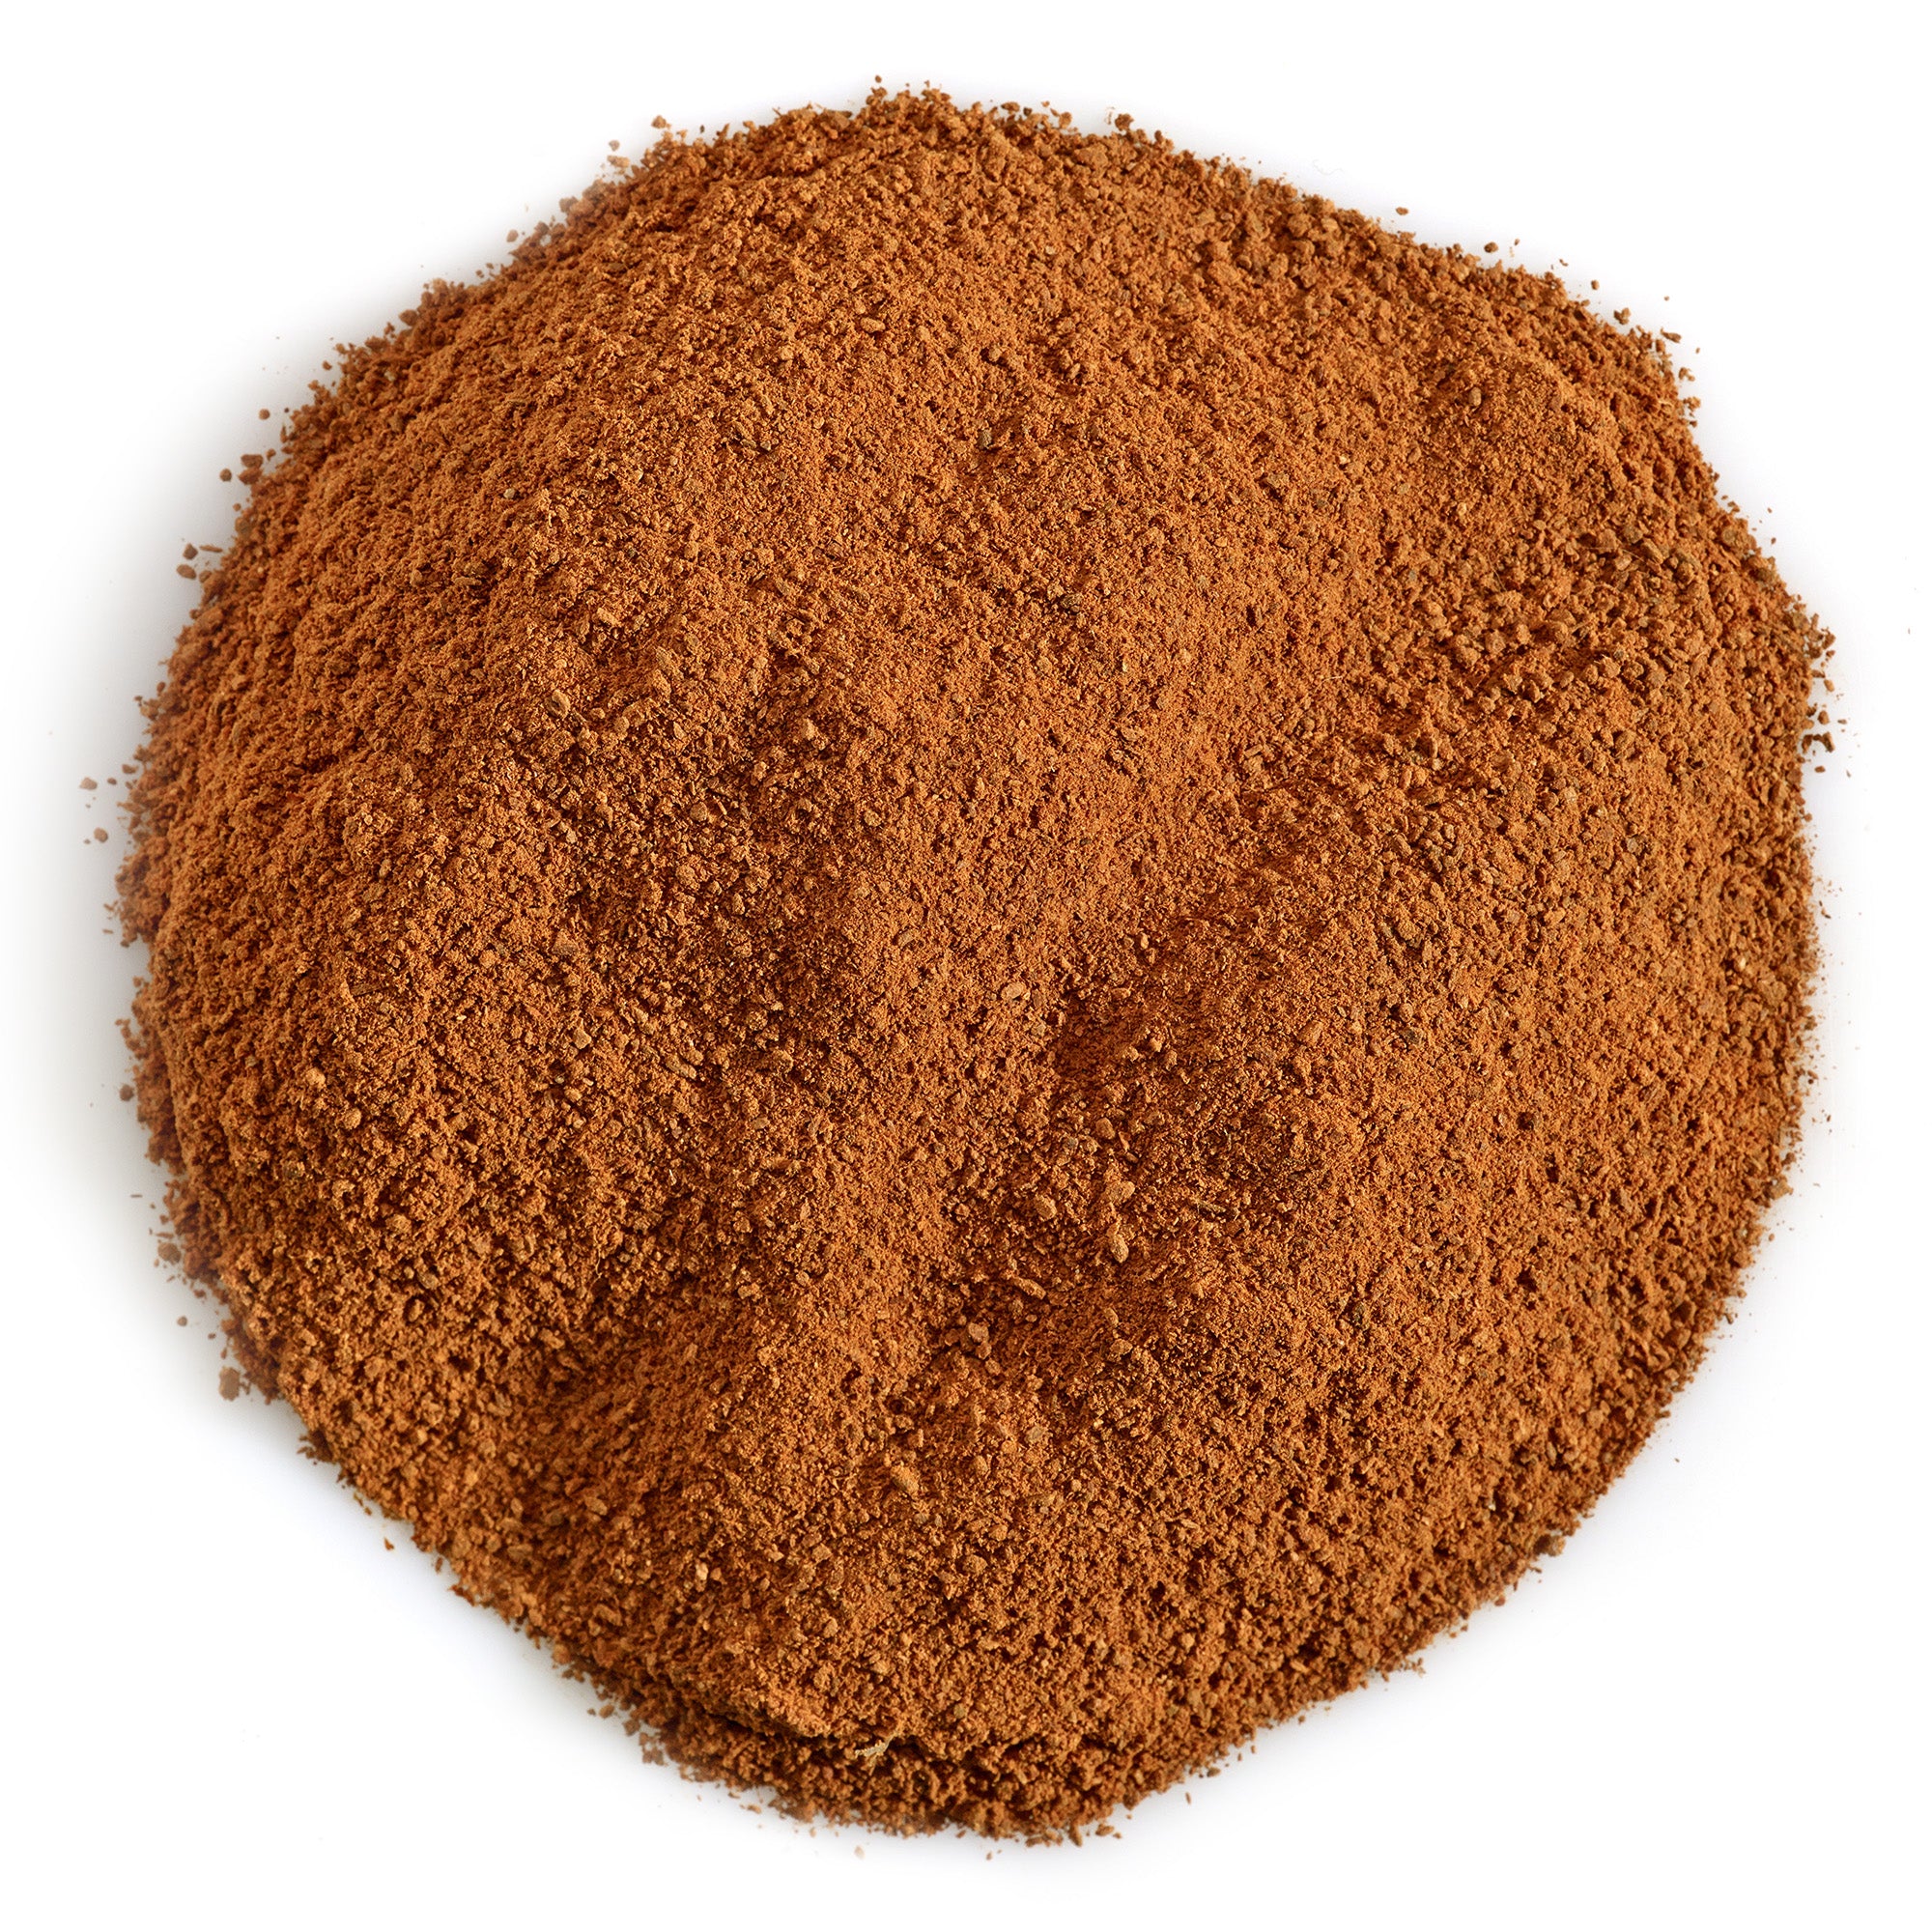 Premium Ground Cinnamon - Spices 